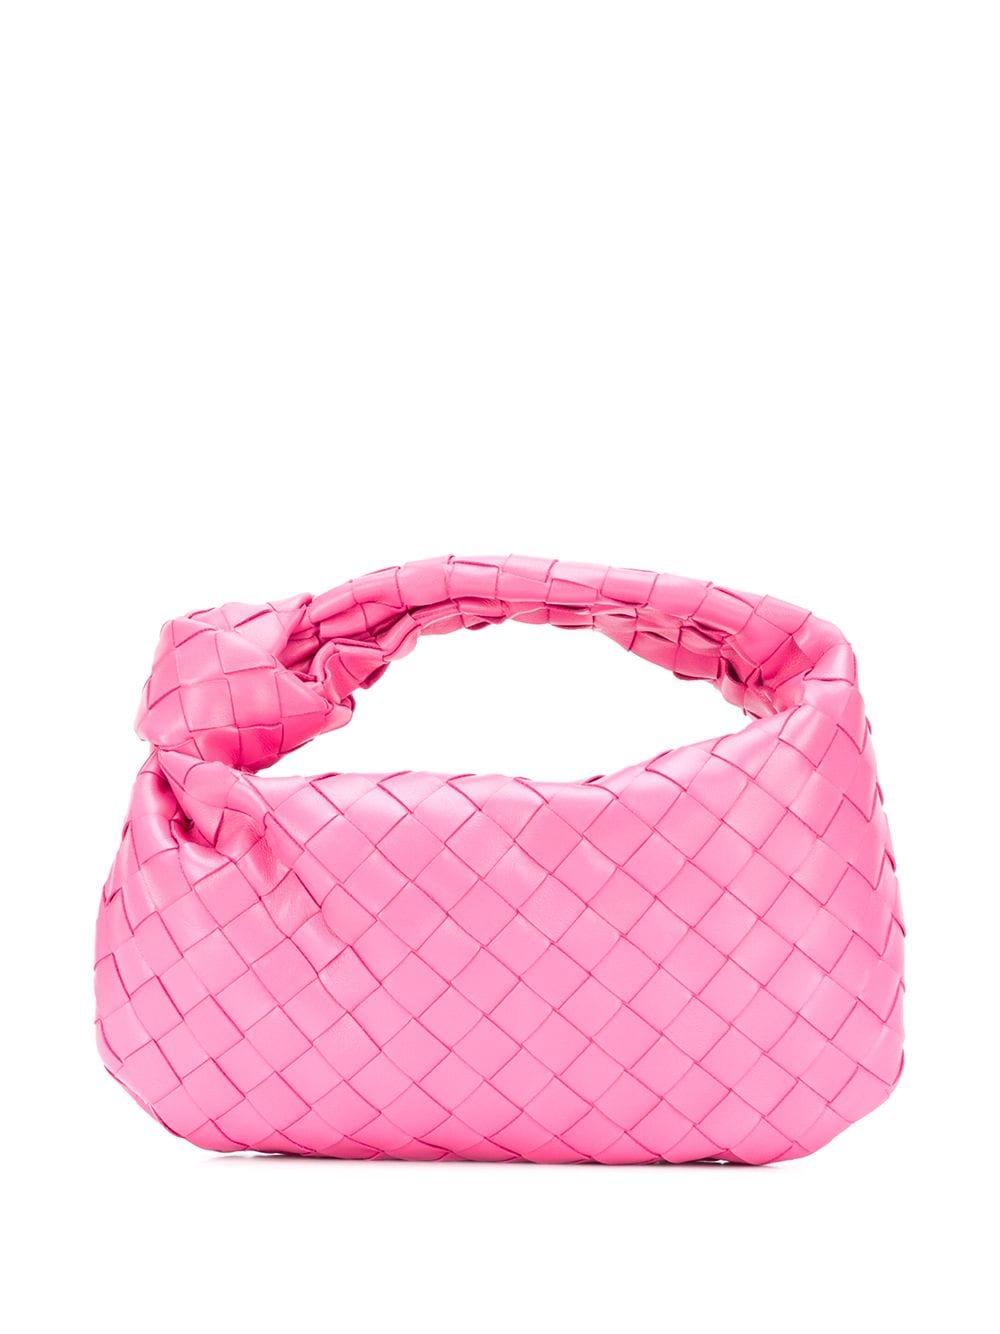 Bottega Veneta Bv Jodie Mini Leather Tote Bag in Pink | Lyst